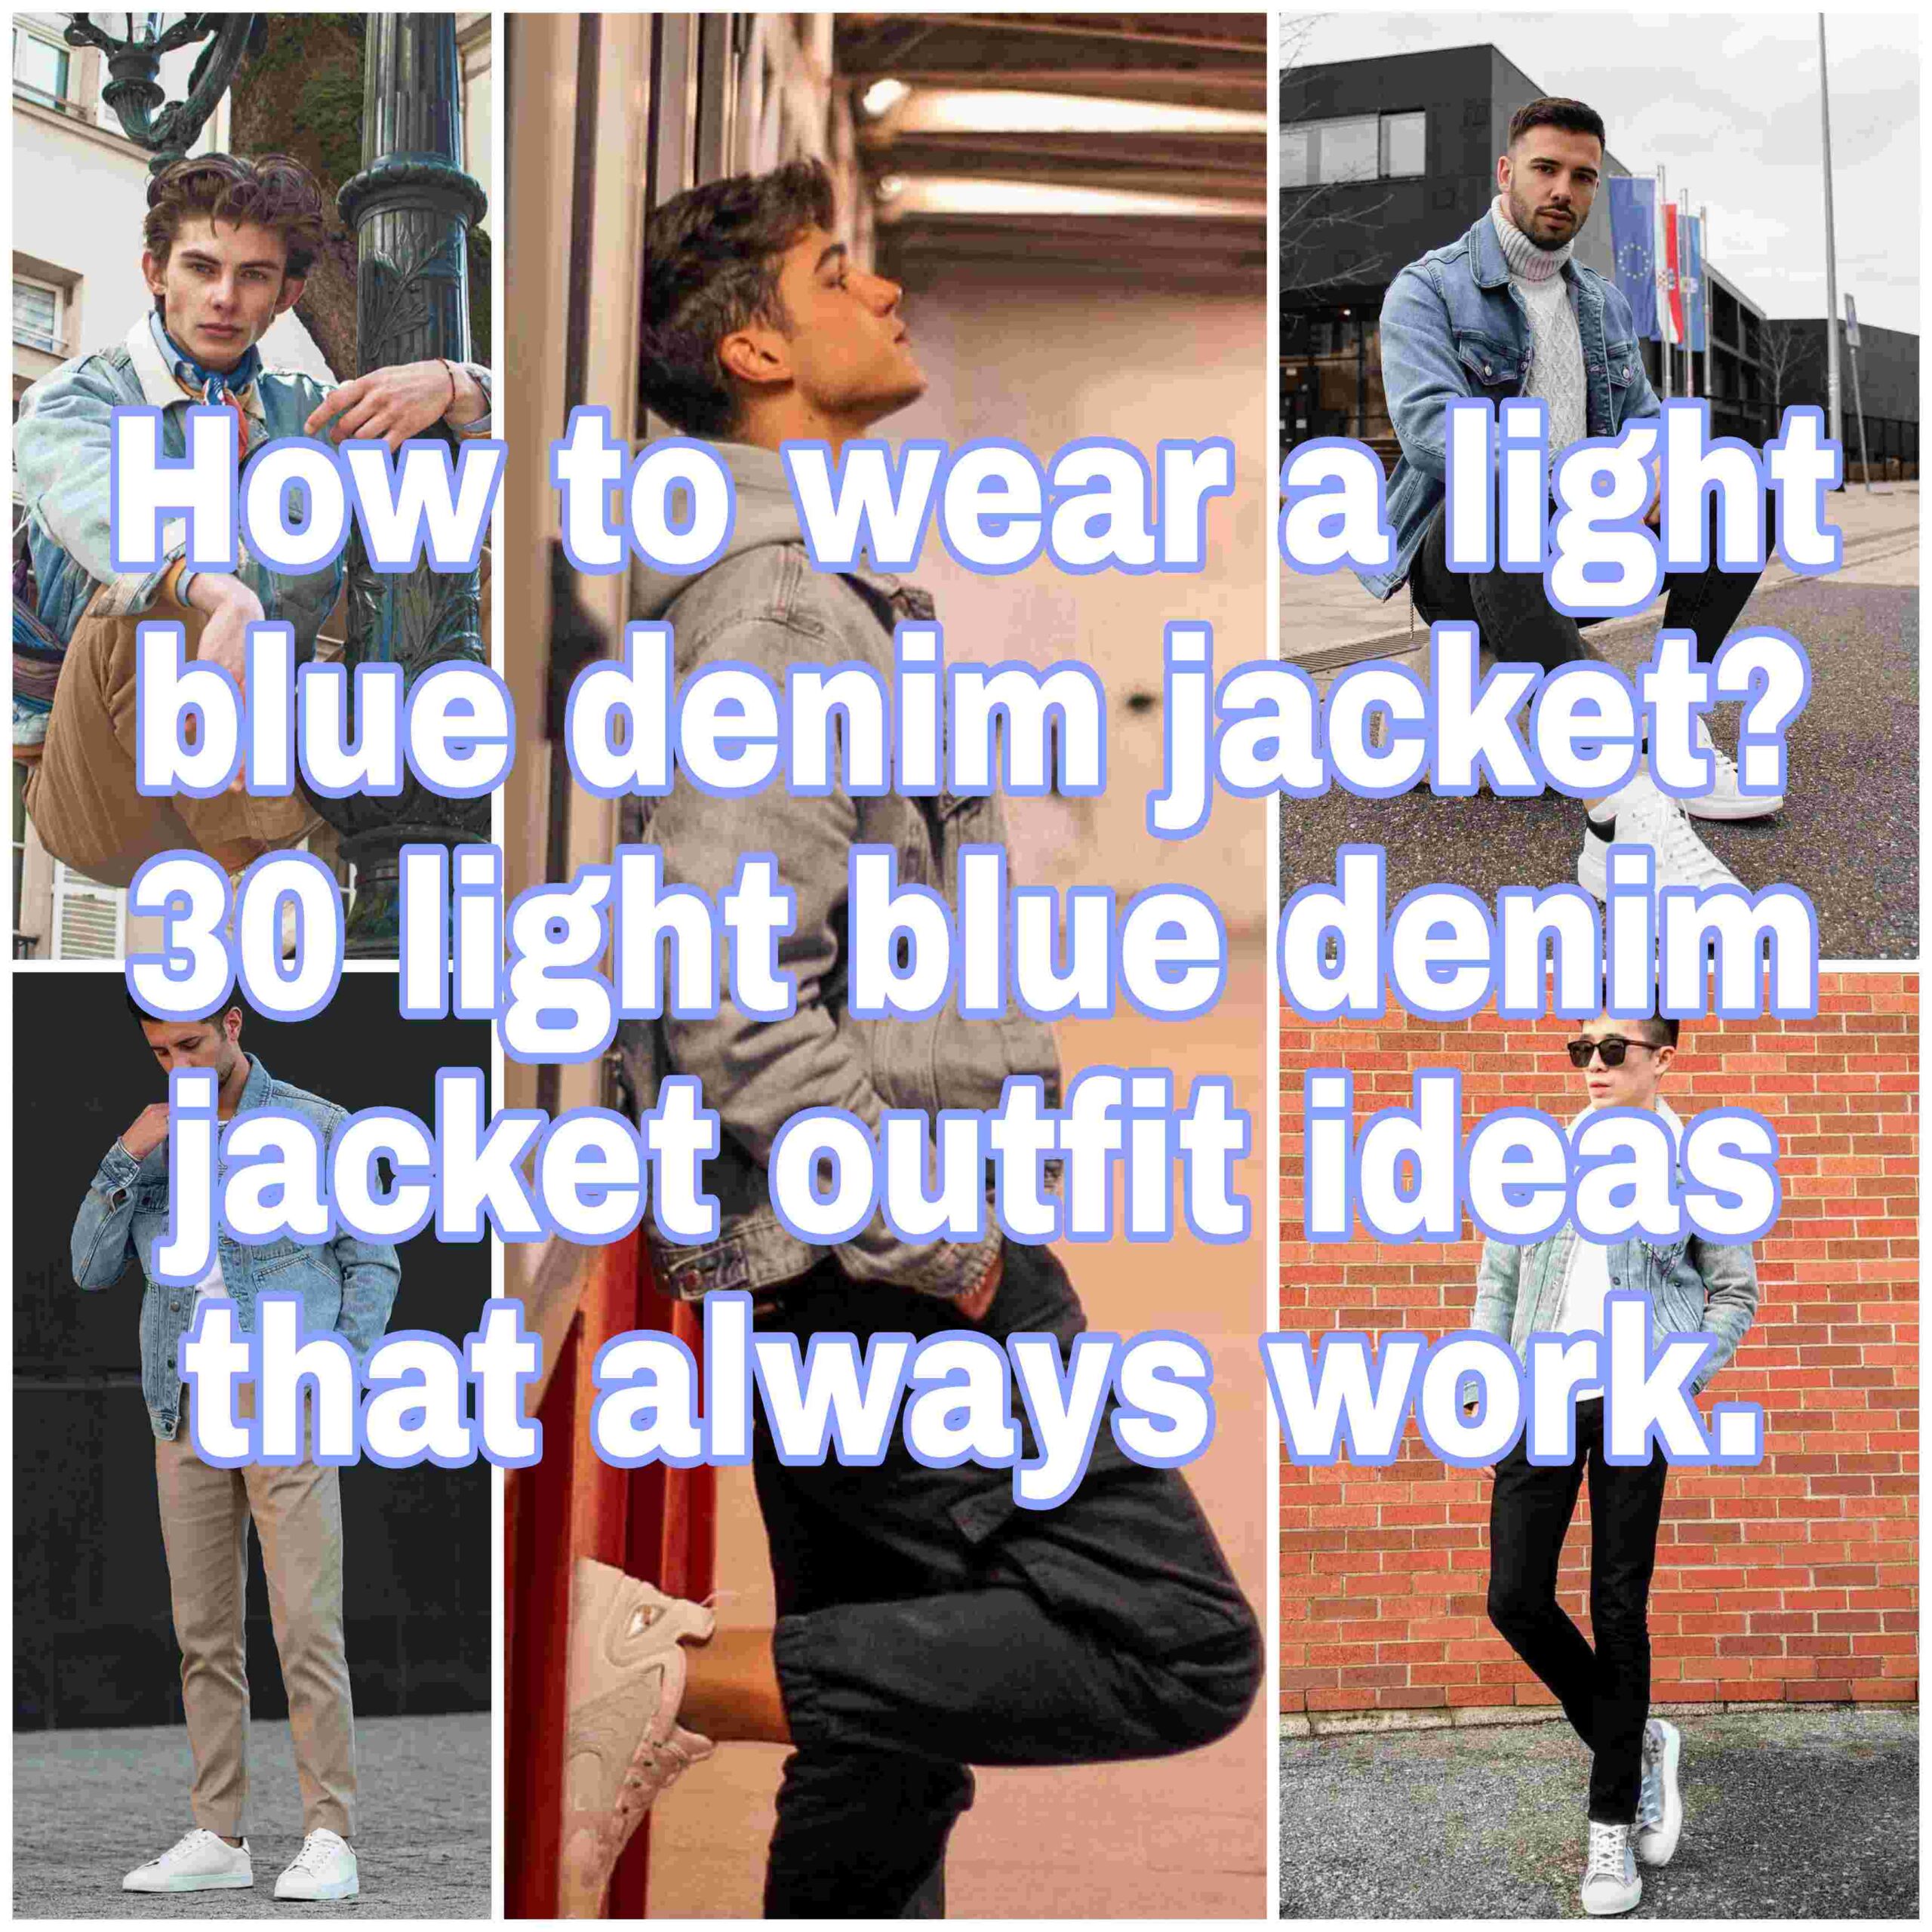 Light blue denim jacket outfit ideas for men